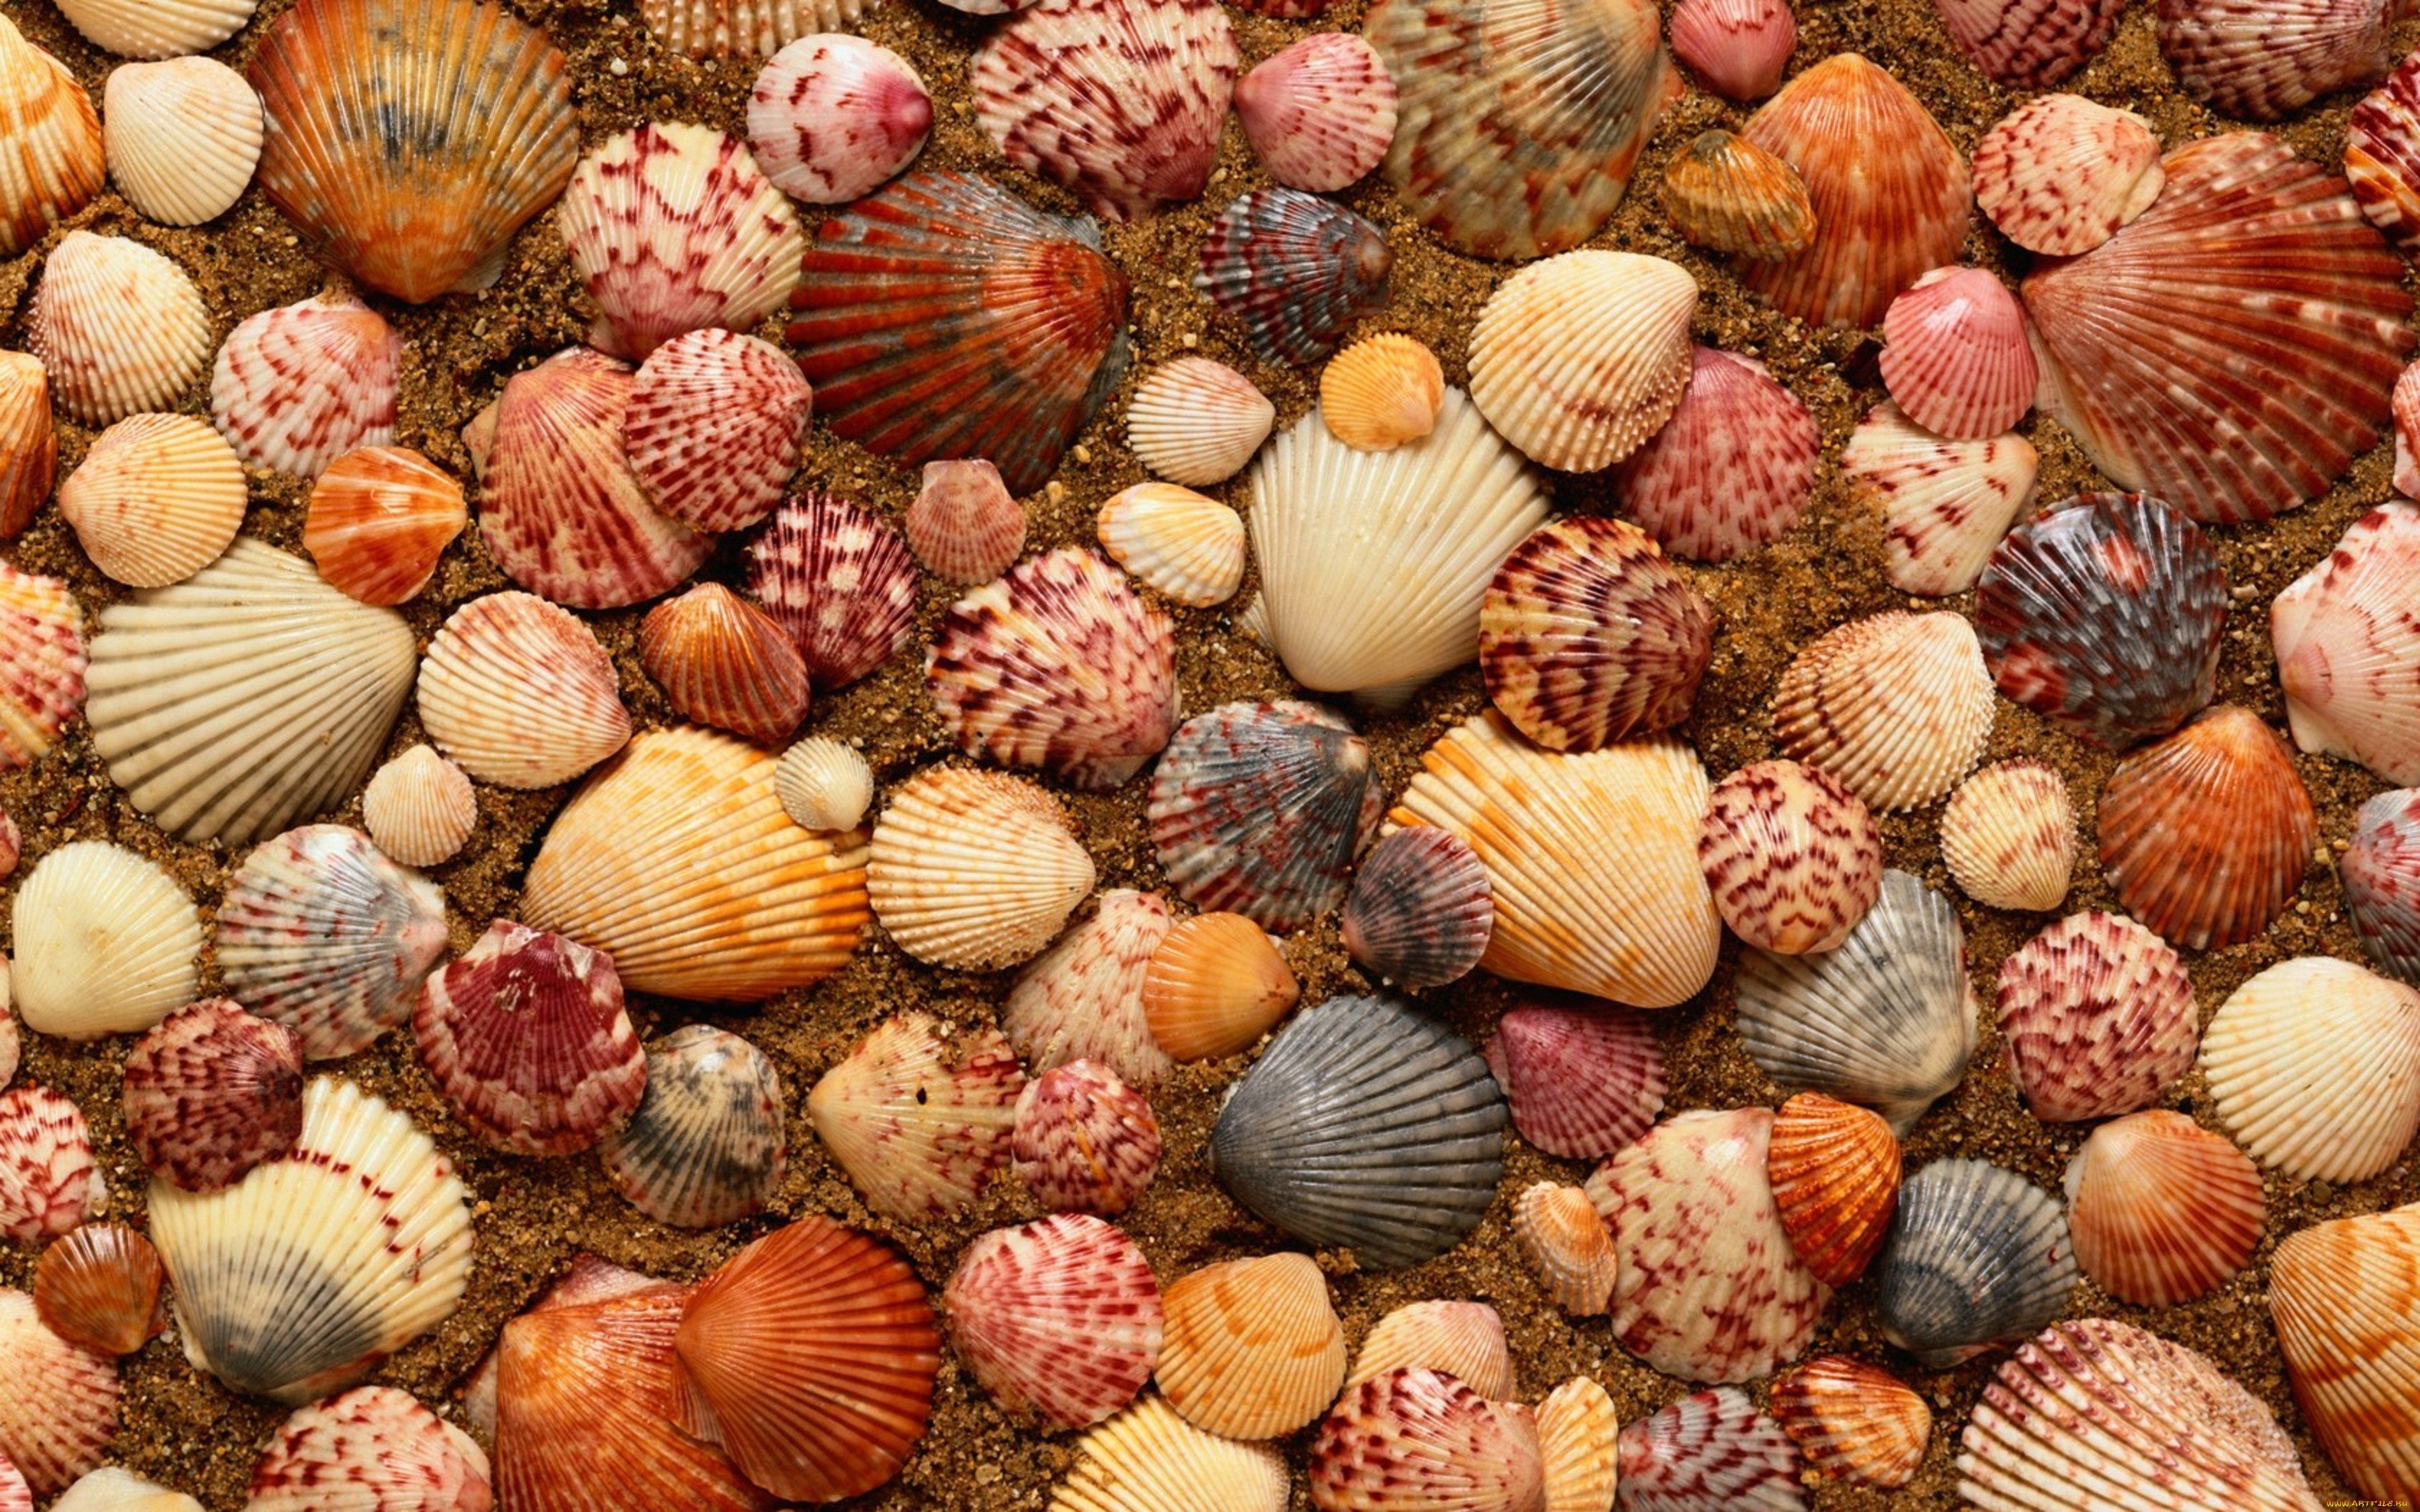 разное, ракушки, кораллы, декоративные, spa, камни, песок